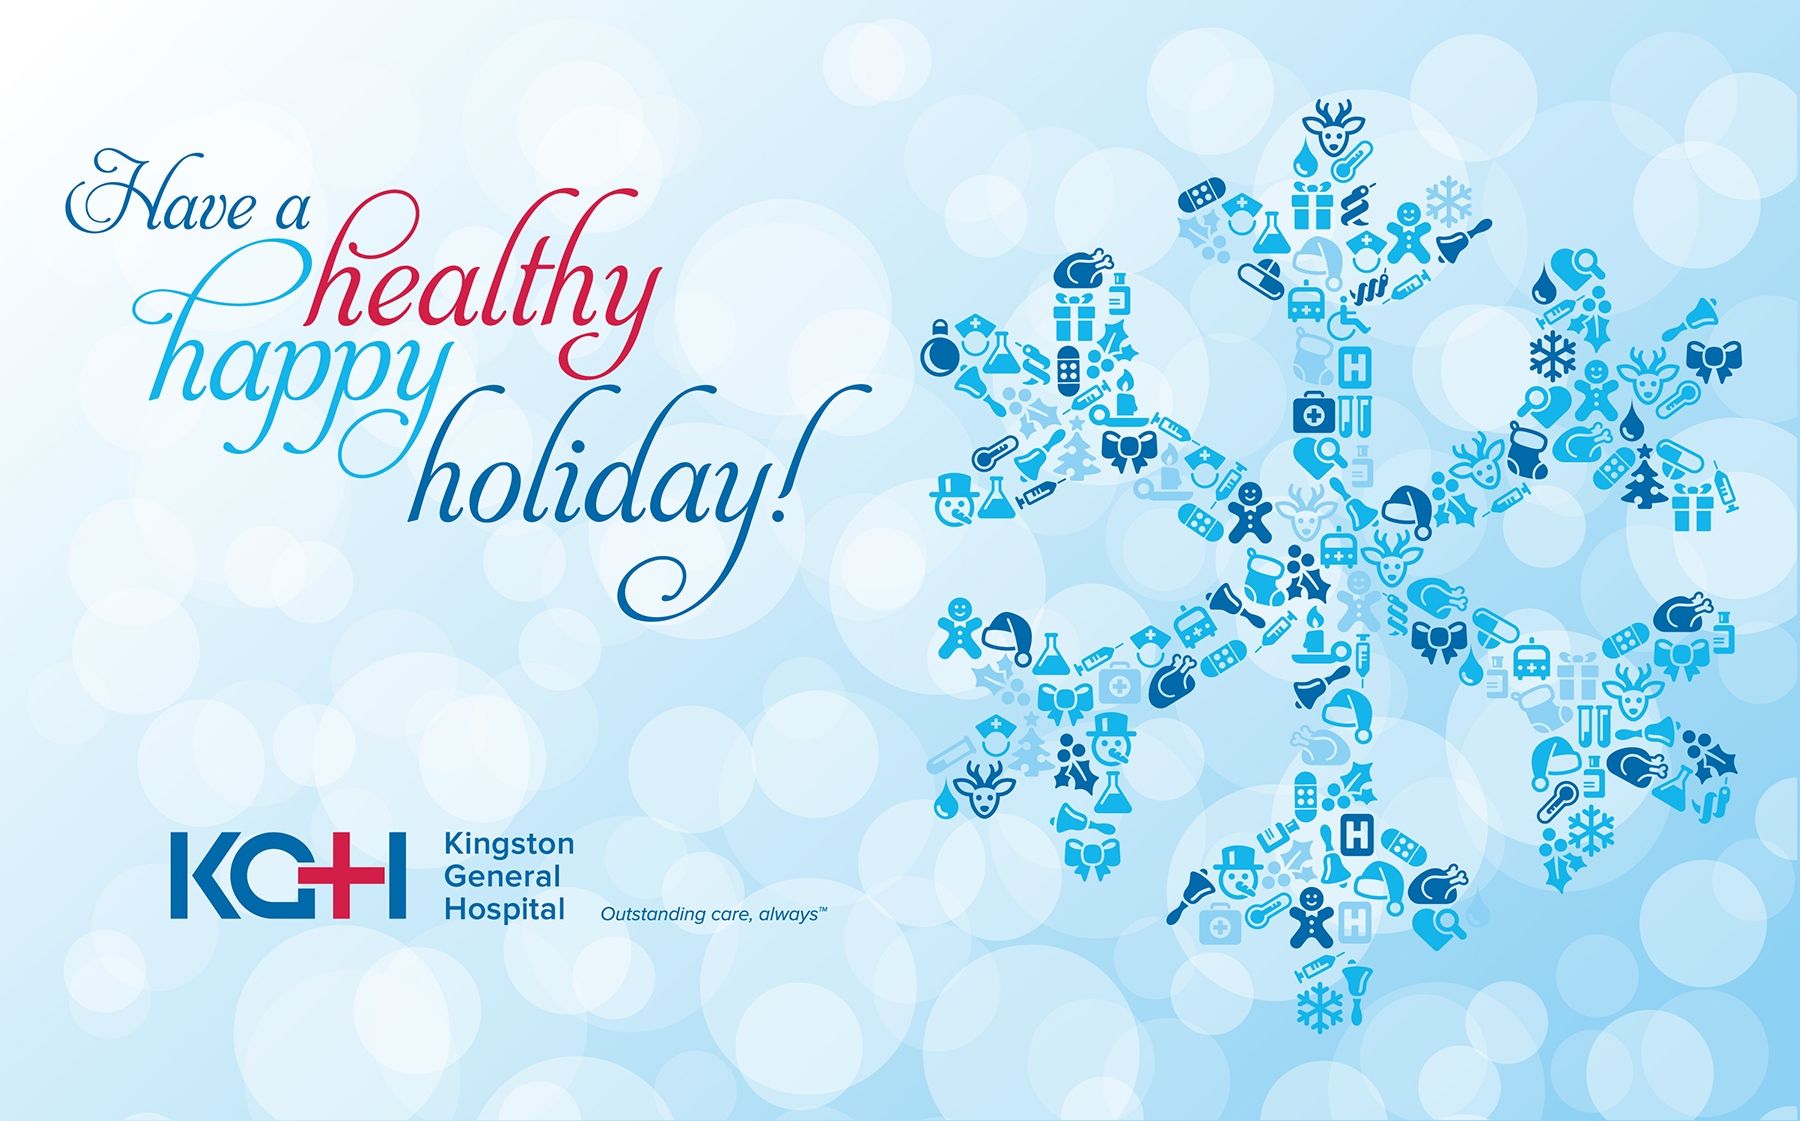 Have a healthy, happy holiday